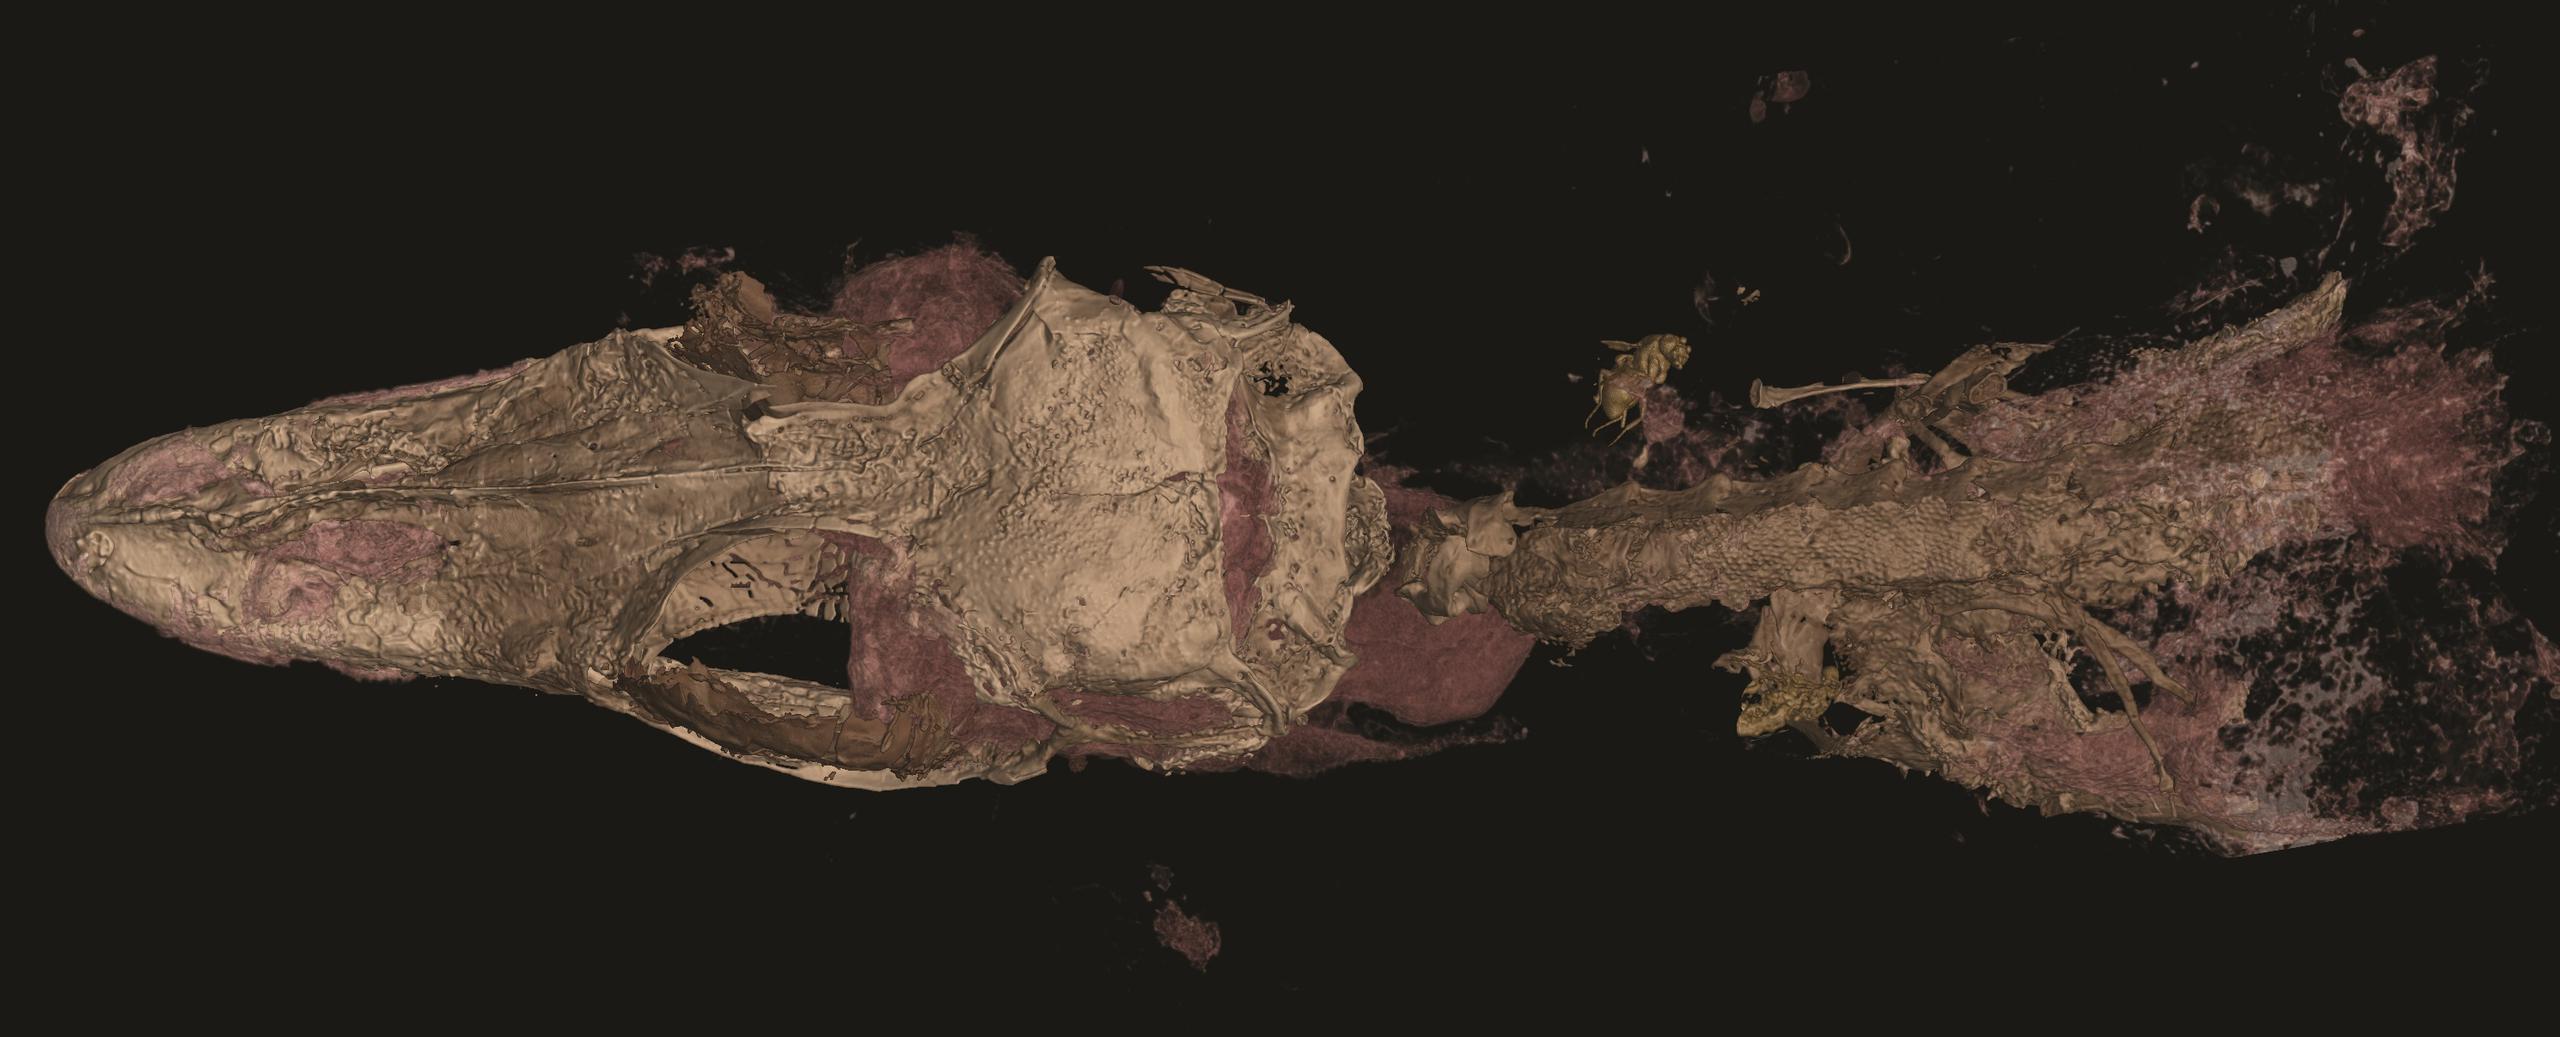 Imagen en tomografía del cráneo del espécimen de  "Oculudentavis naga".  Imagen cedida por el Institut Català de Paleontologia Miquel Crusafont.
